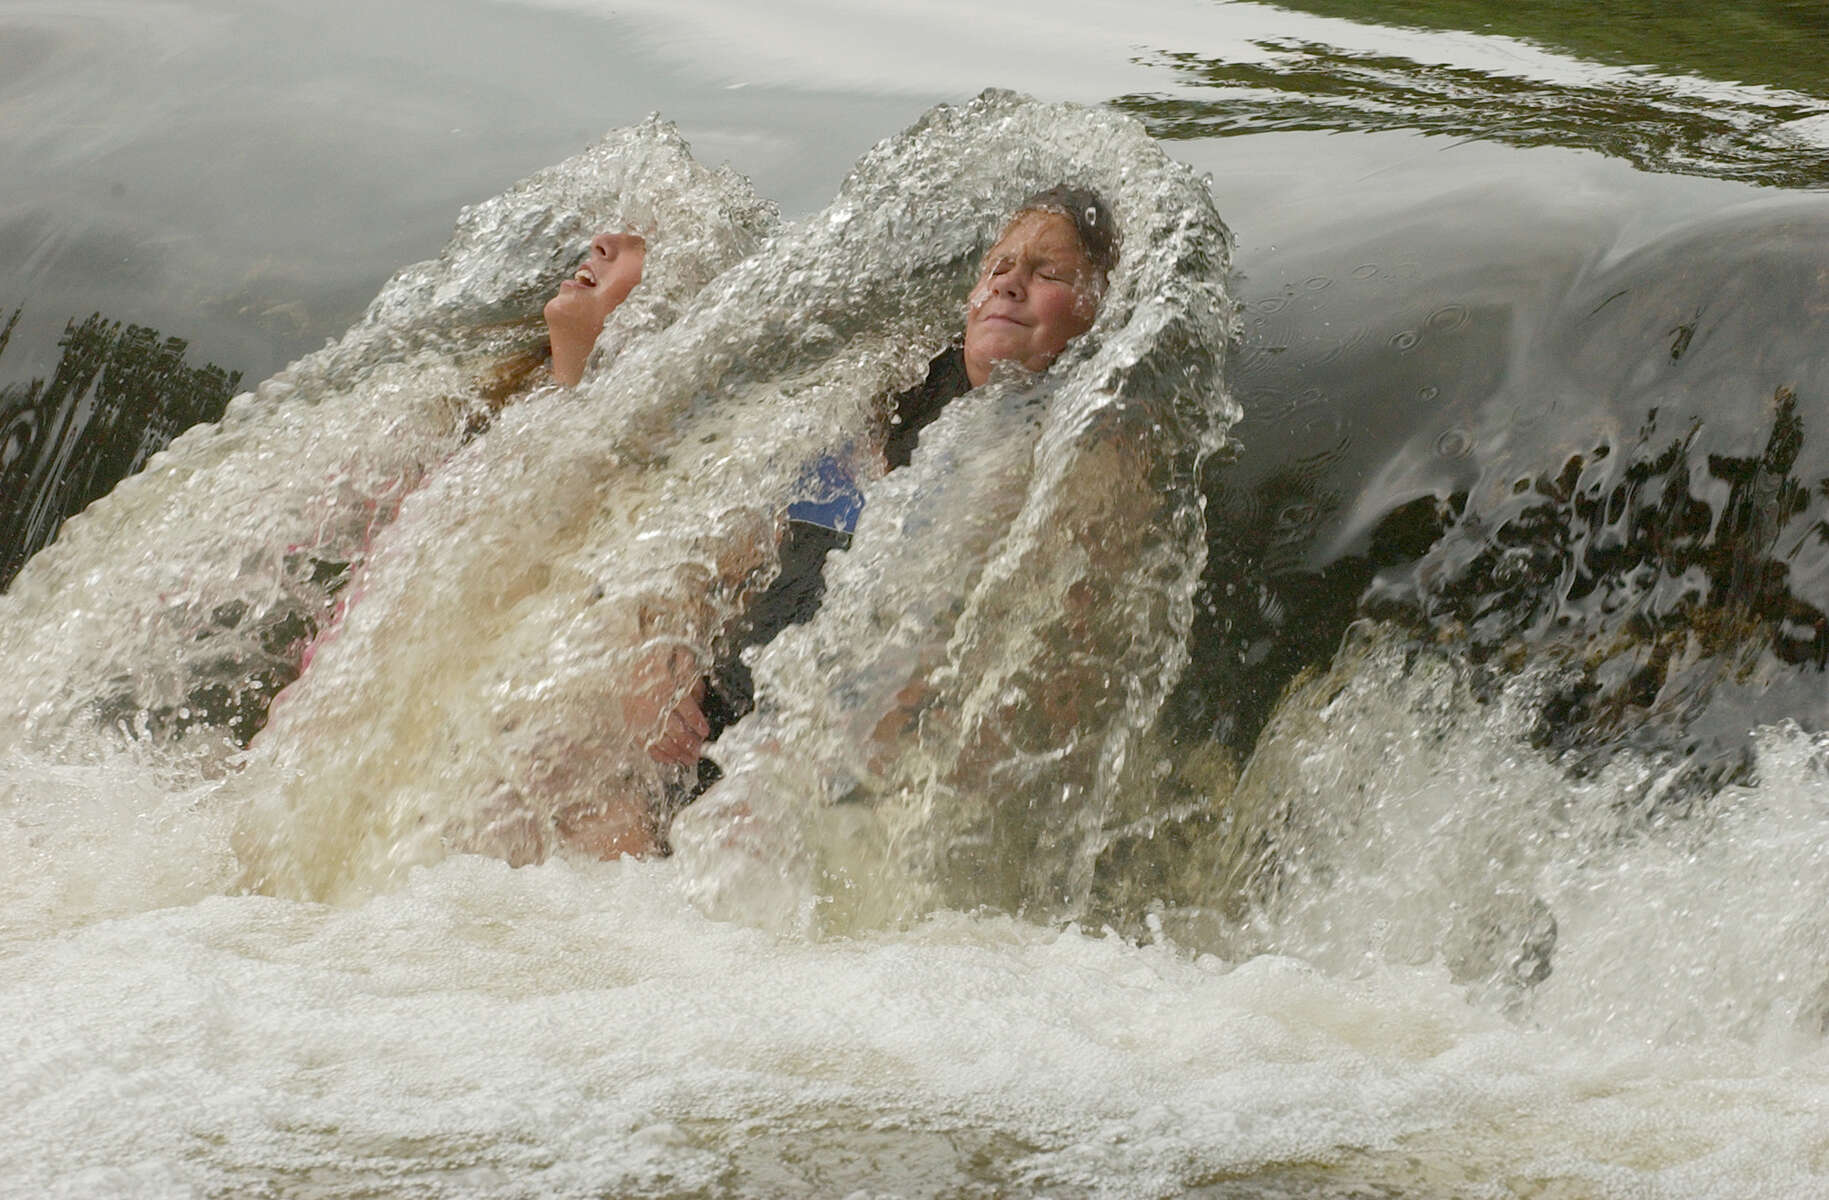 Lauren Smosynski (left) 13, and her friend Heather Aiken, 13, cool off in the Brandywine Creek on July 14, 2004.